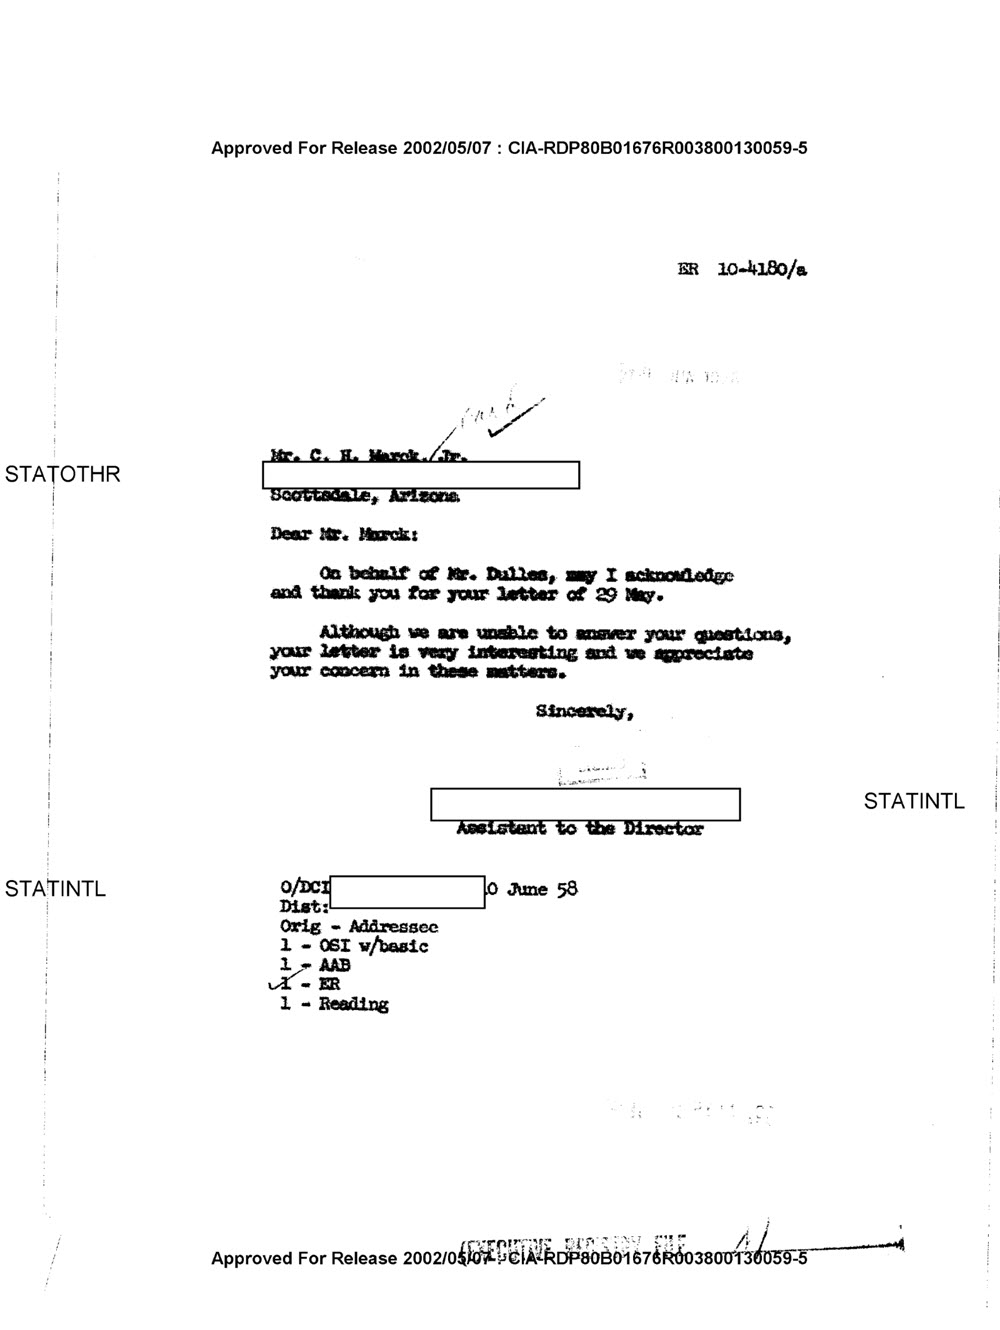 CIA Letter To Mr. C. L. Marck, Jr. From (Sanitized), June 10, 1958